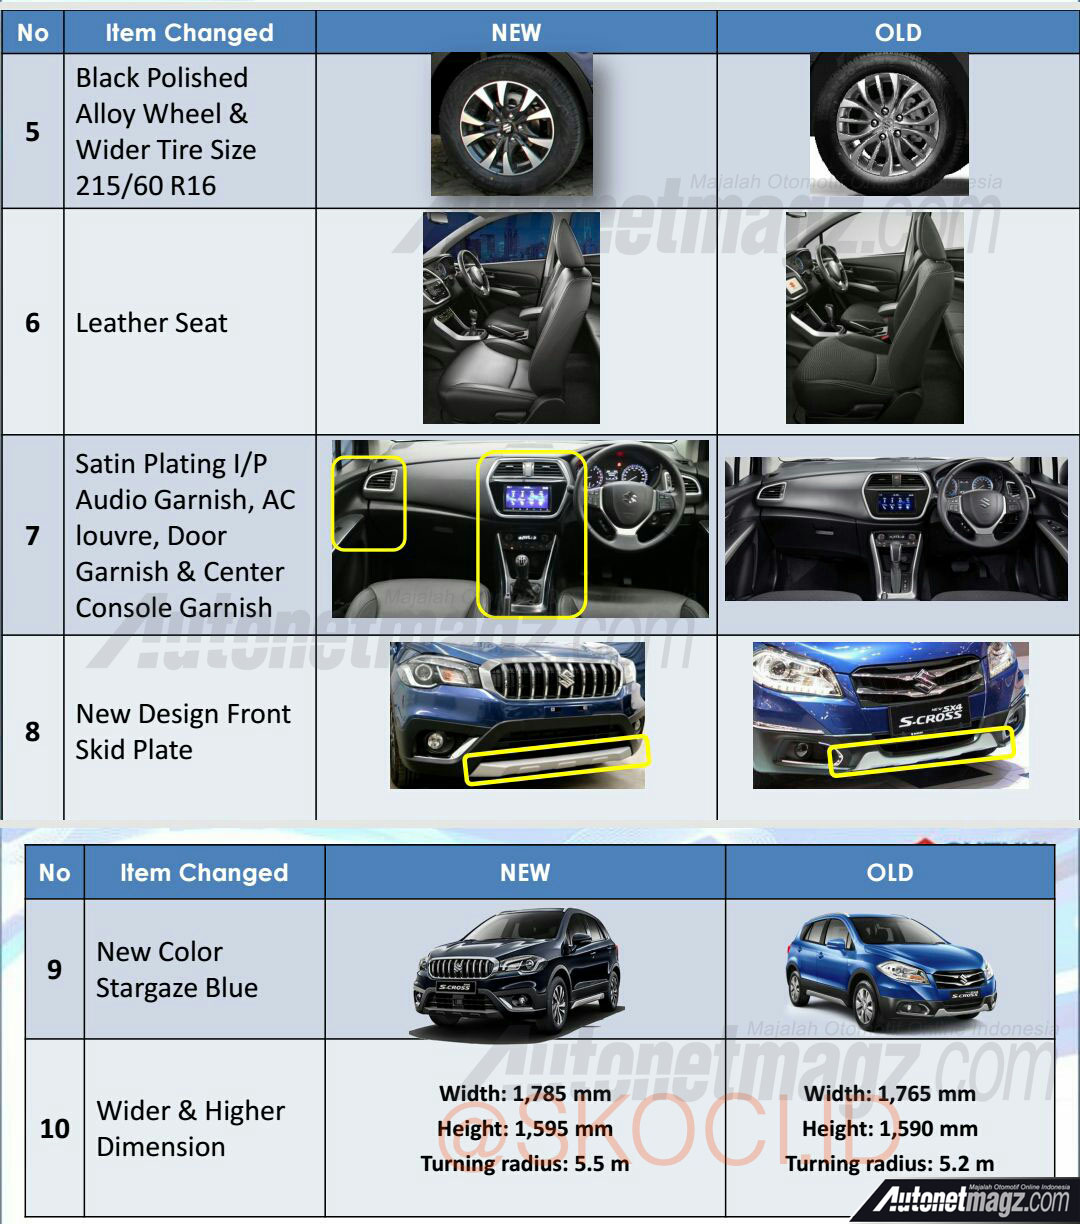 Berita, detail Bocoran Suzuki SX4 S-Cross Facelift lengkap: Ini Detail Ubahan Suzuki SX4 S-Cross Facelift 2018, Jok Kulit Sob!